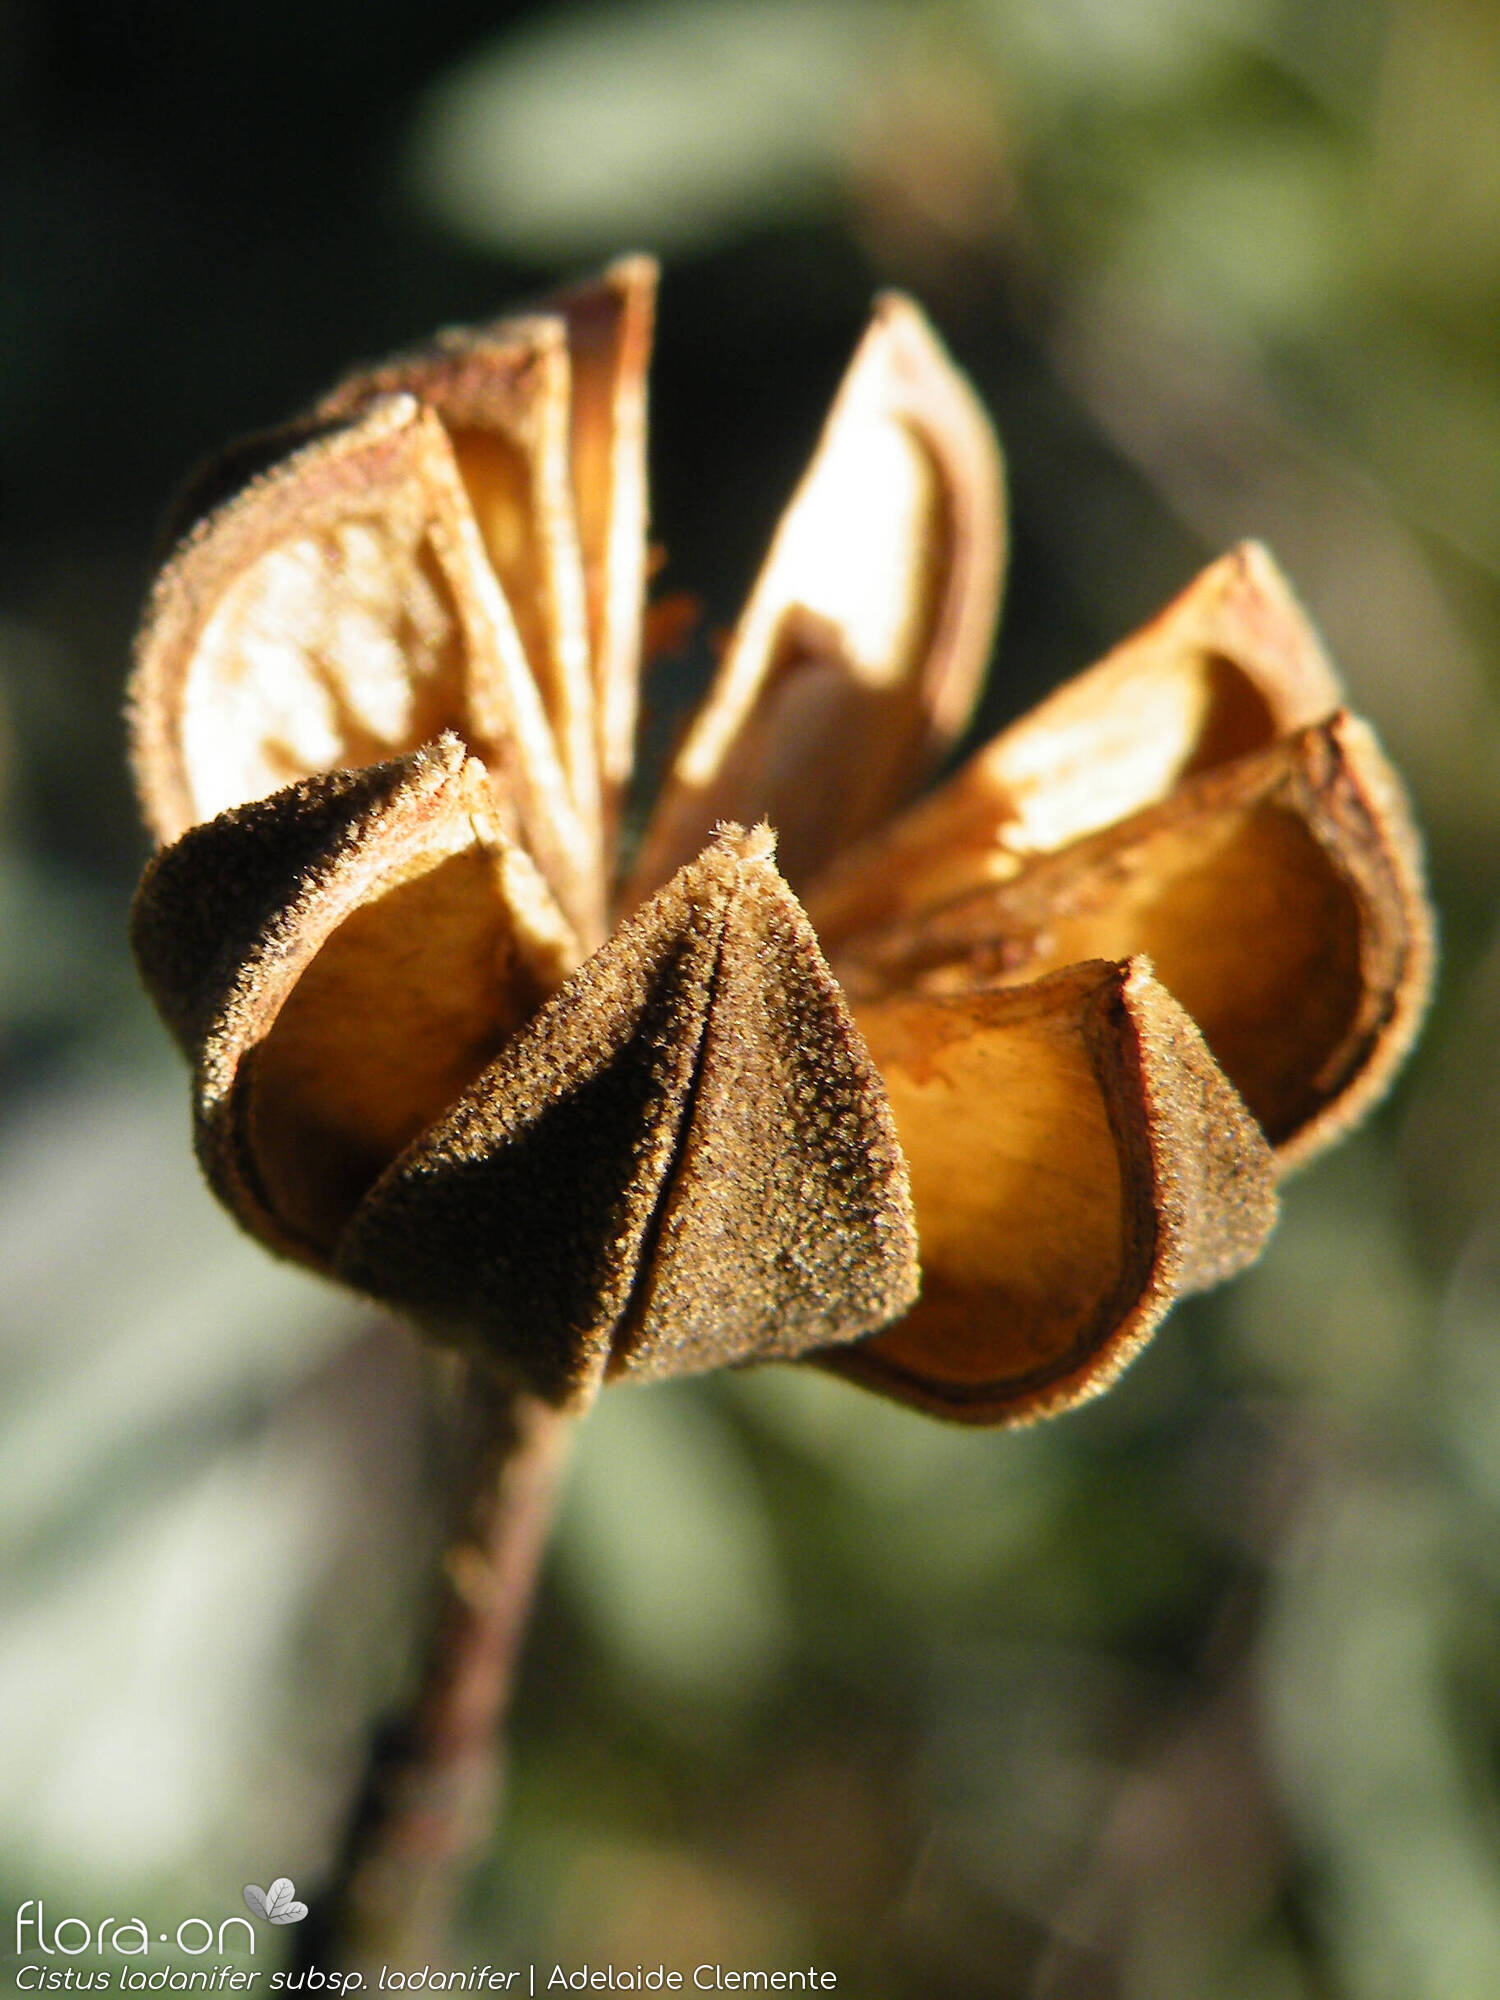 Cistus ladanifer ladanifer - Fruto | Adelaide Clemente; CC BY-NC 4.0